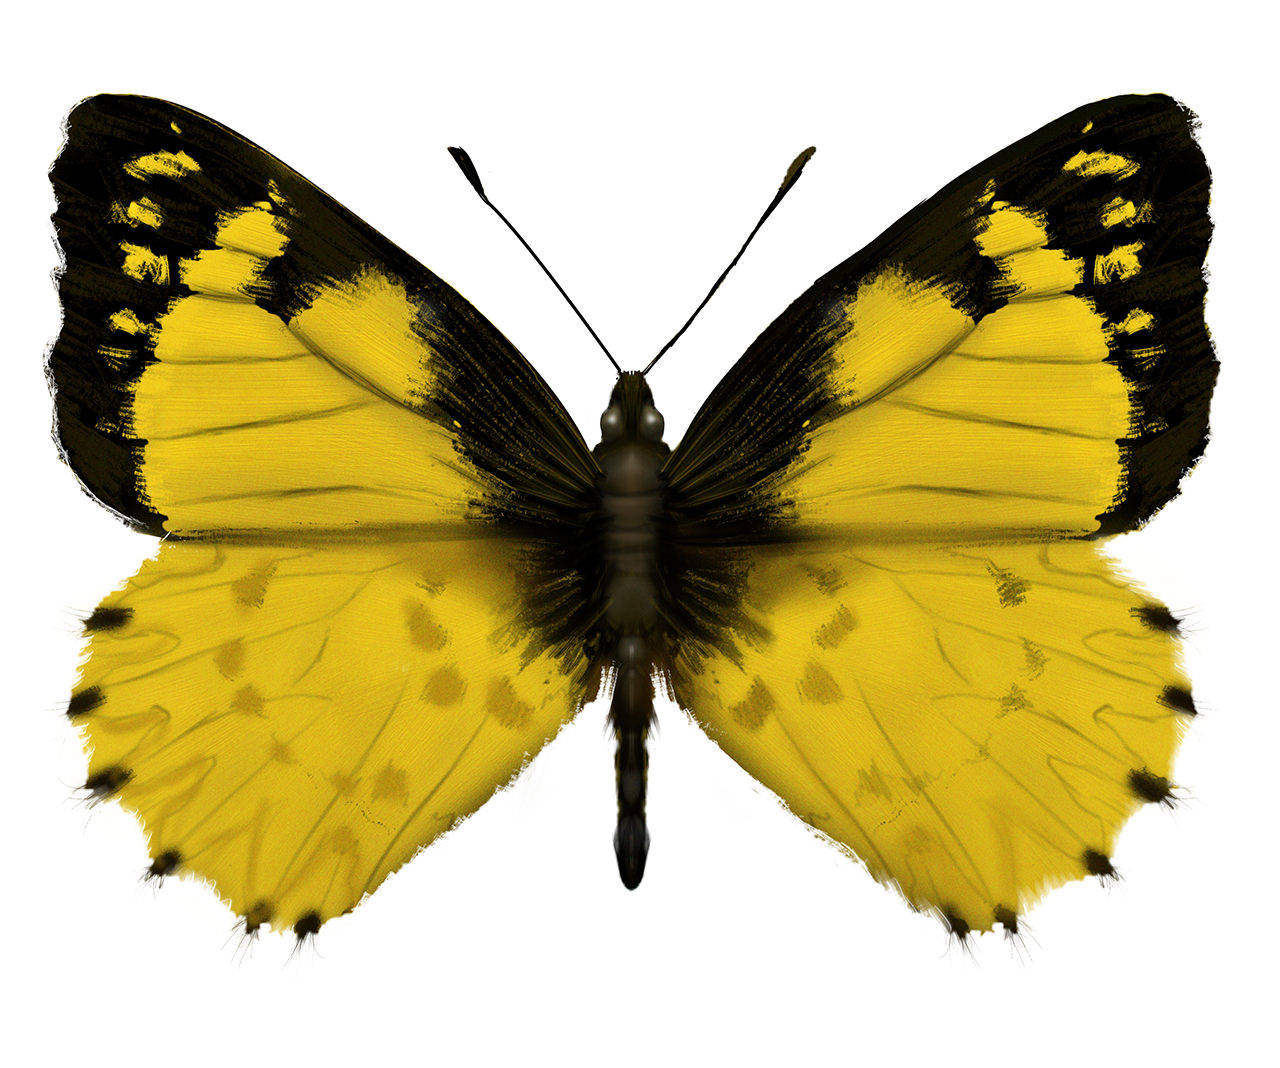 Mariposa aurinegra del Tamá